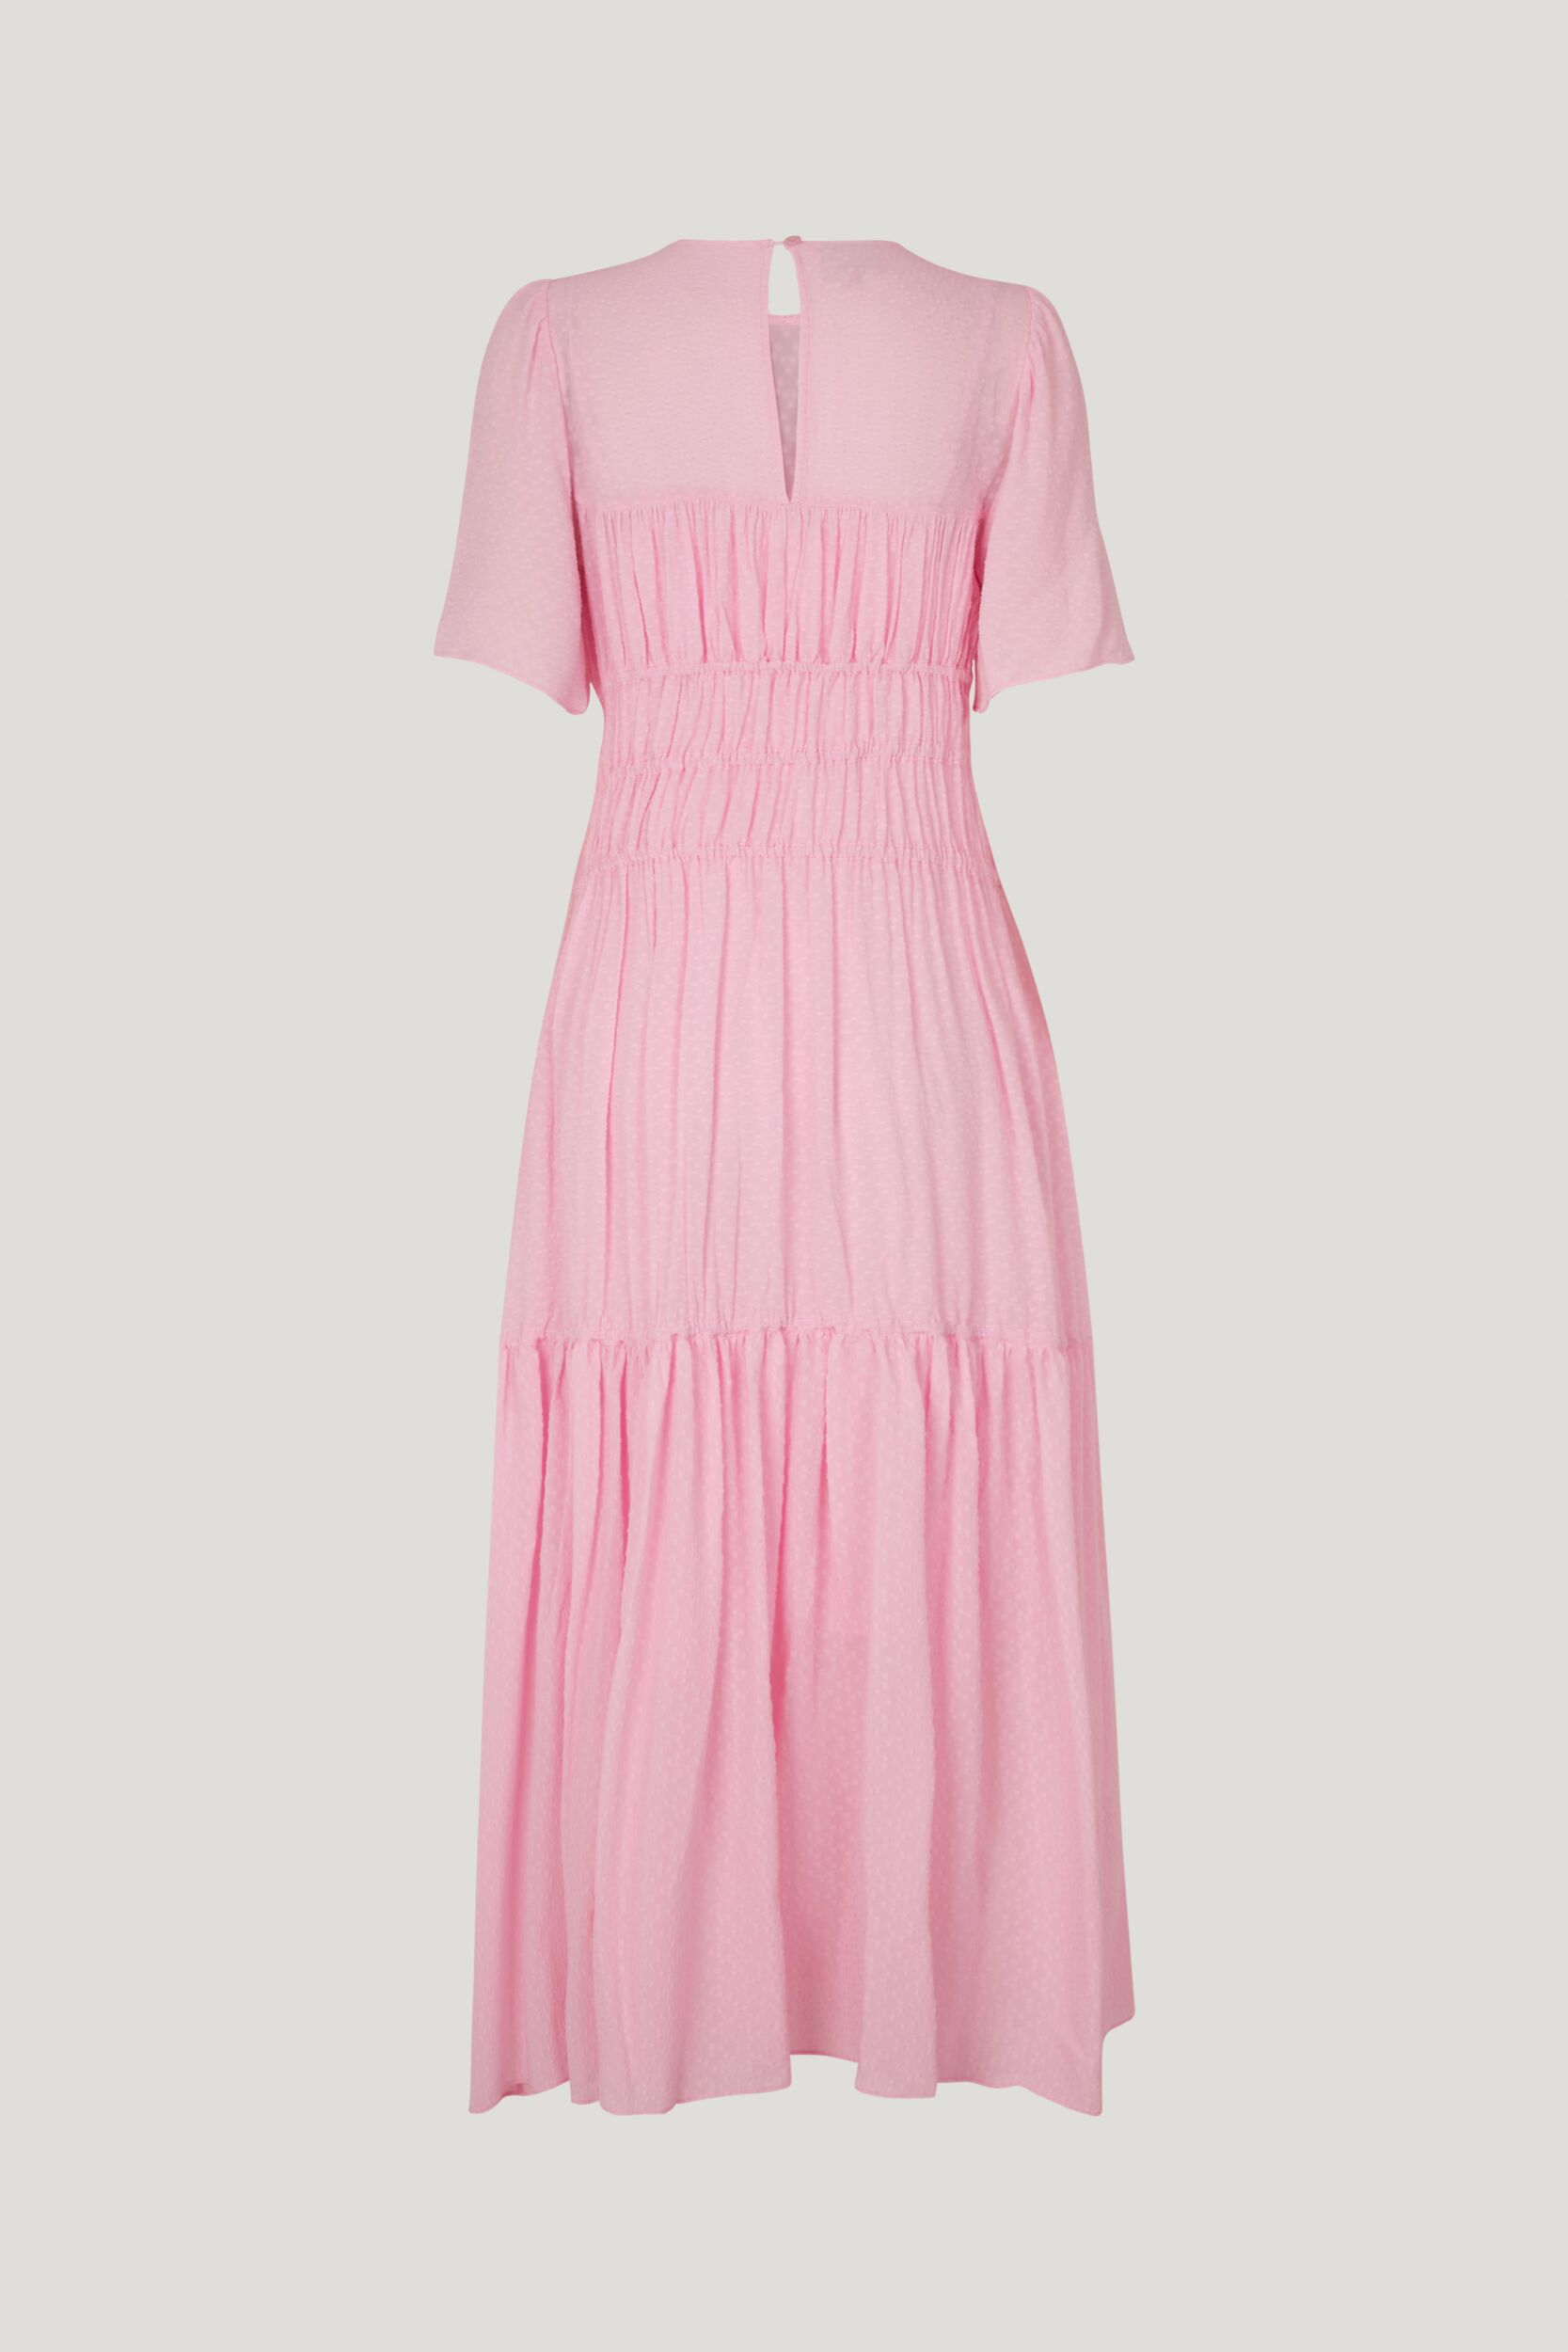 Anissa Parfait Pink Dress – Canopy